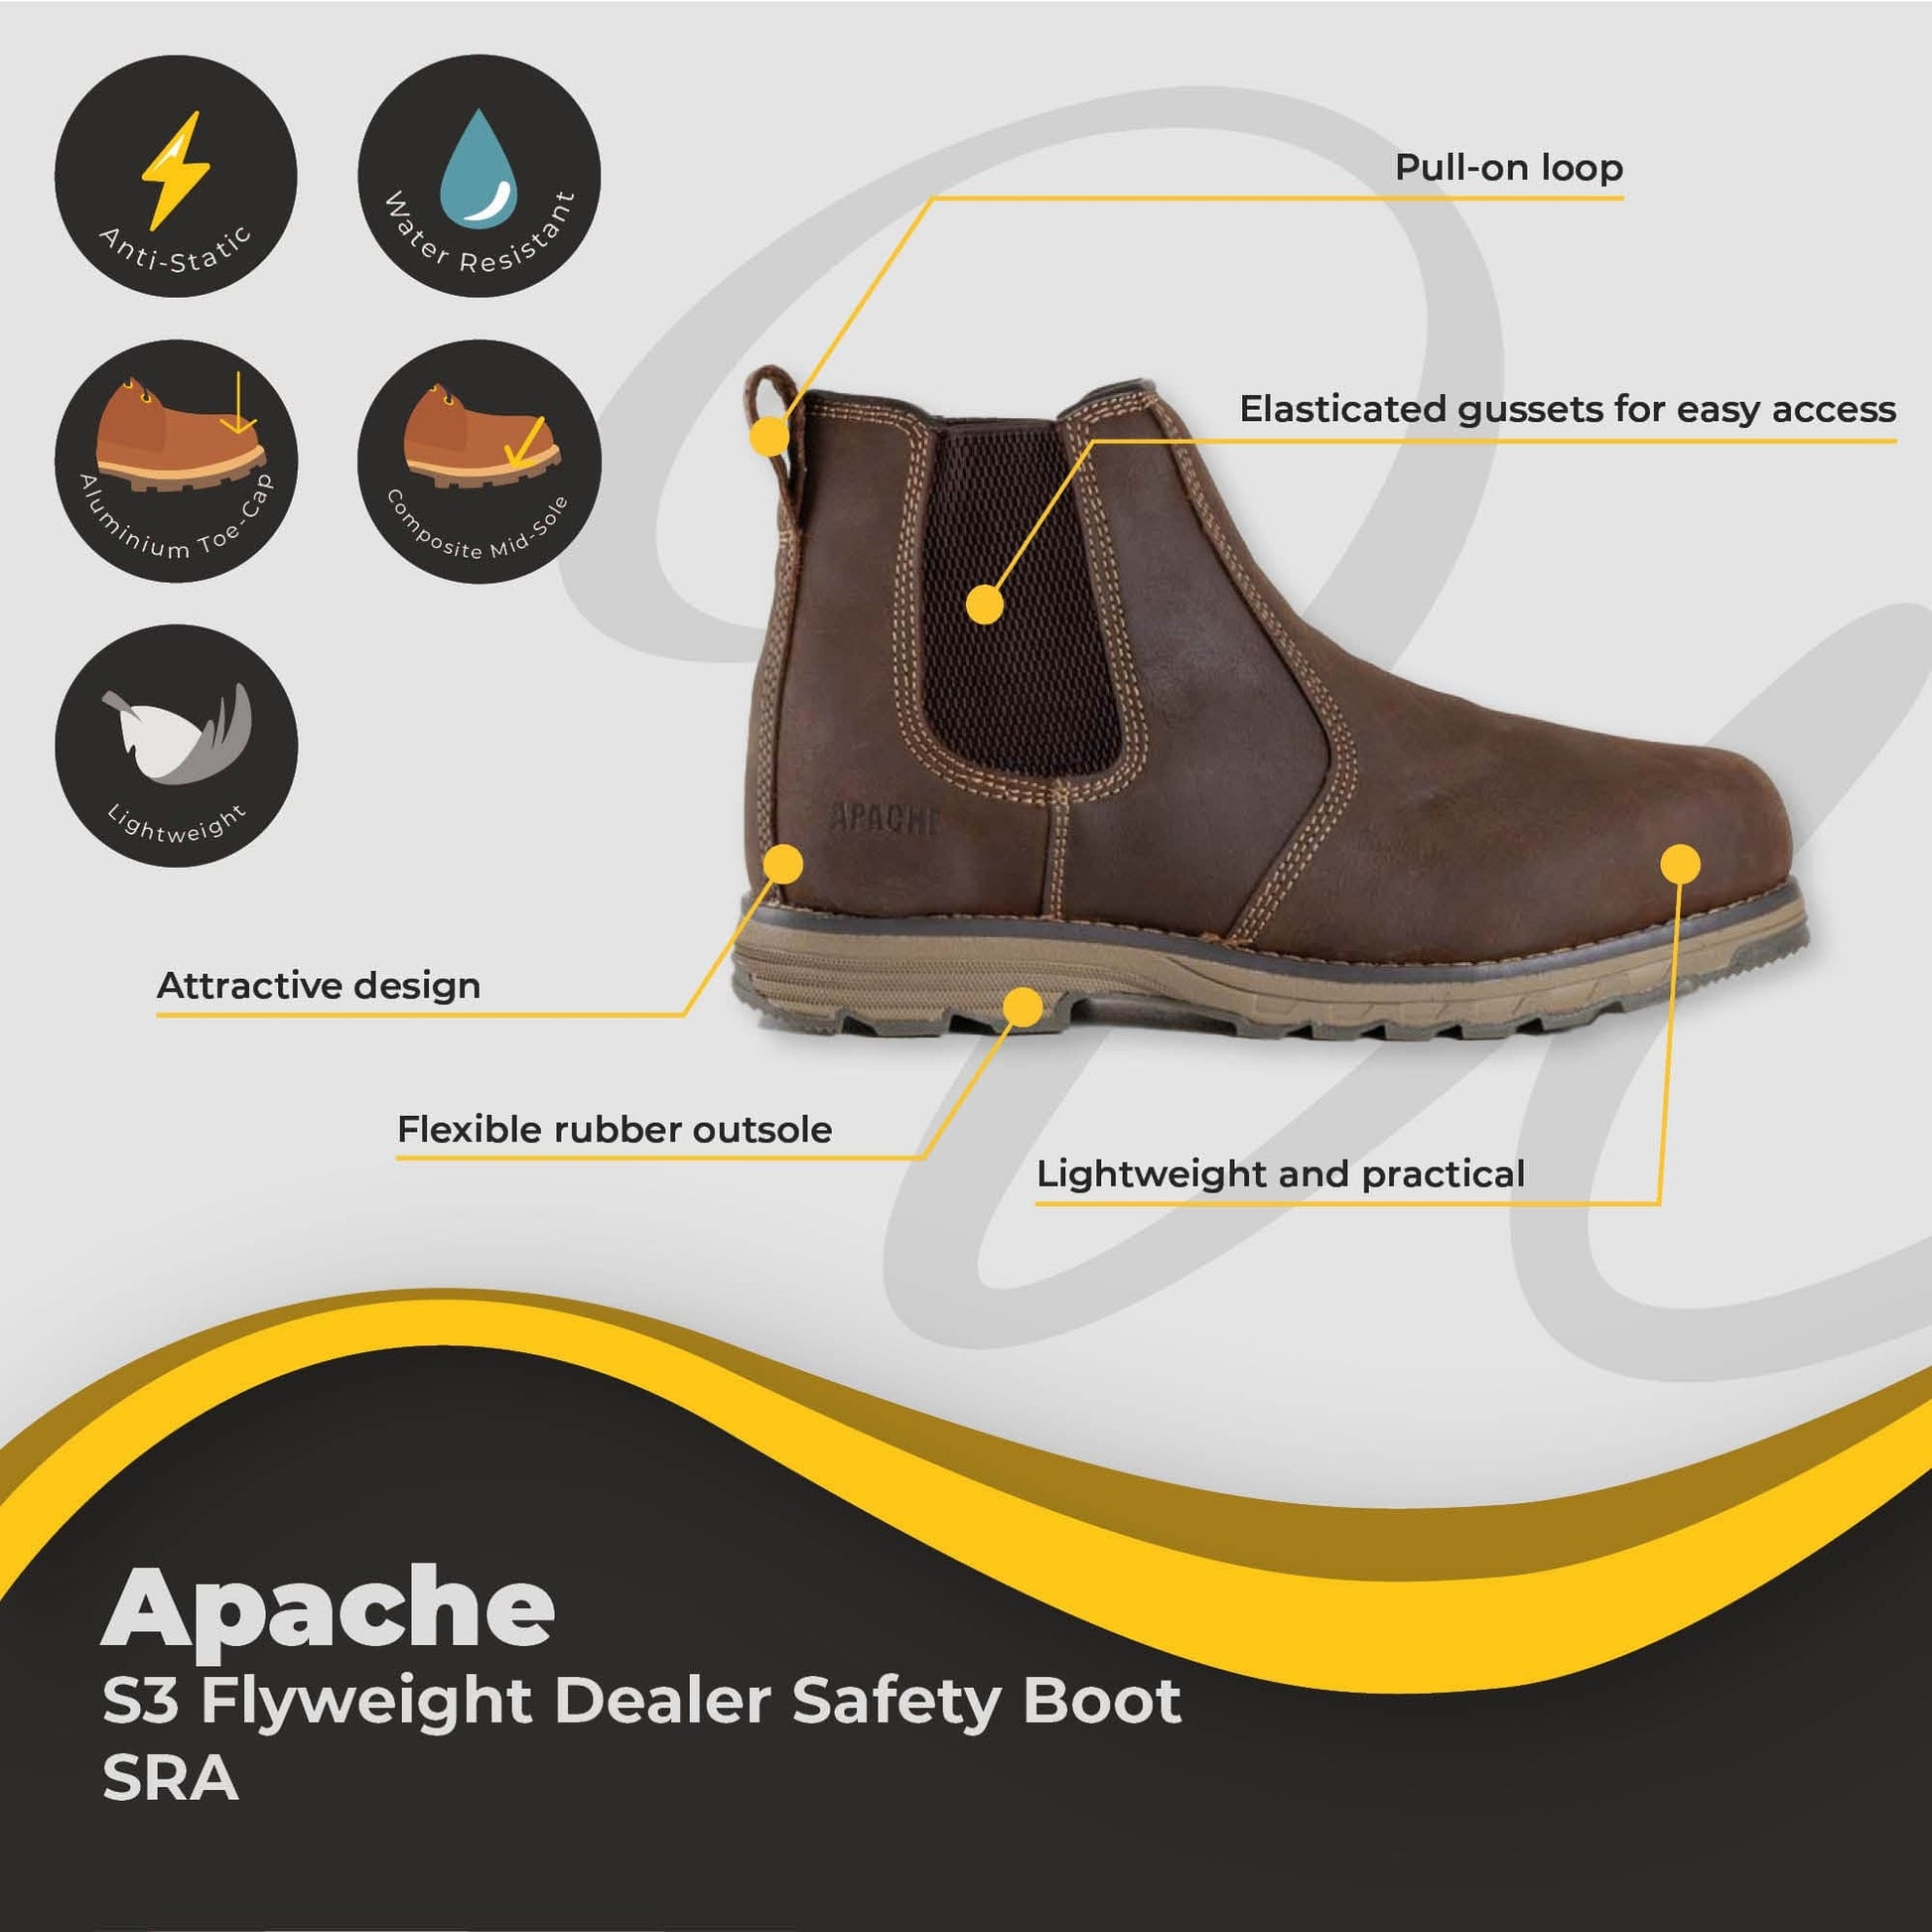 apache flyweight dealer safety boot s3 sra dd220 br 06